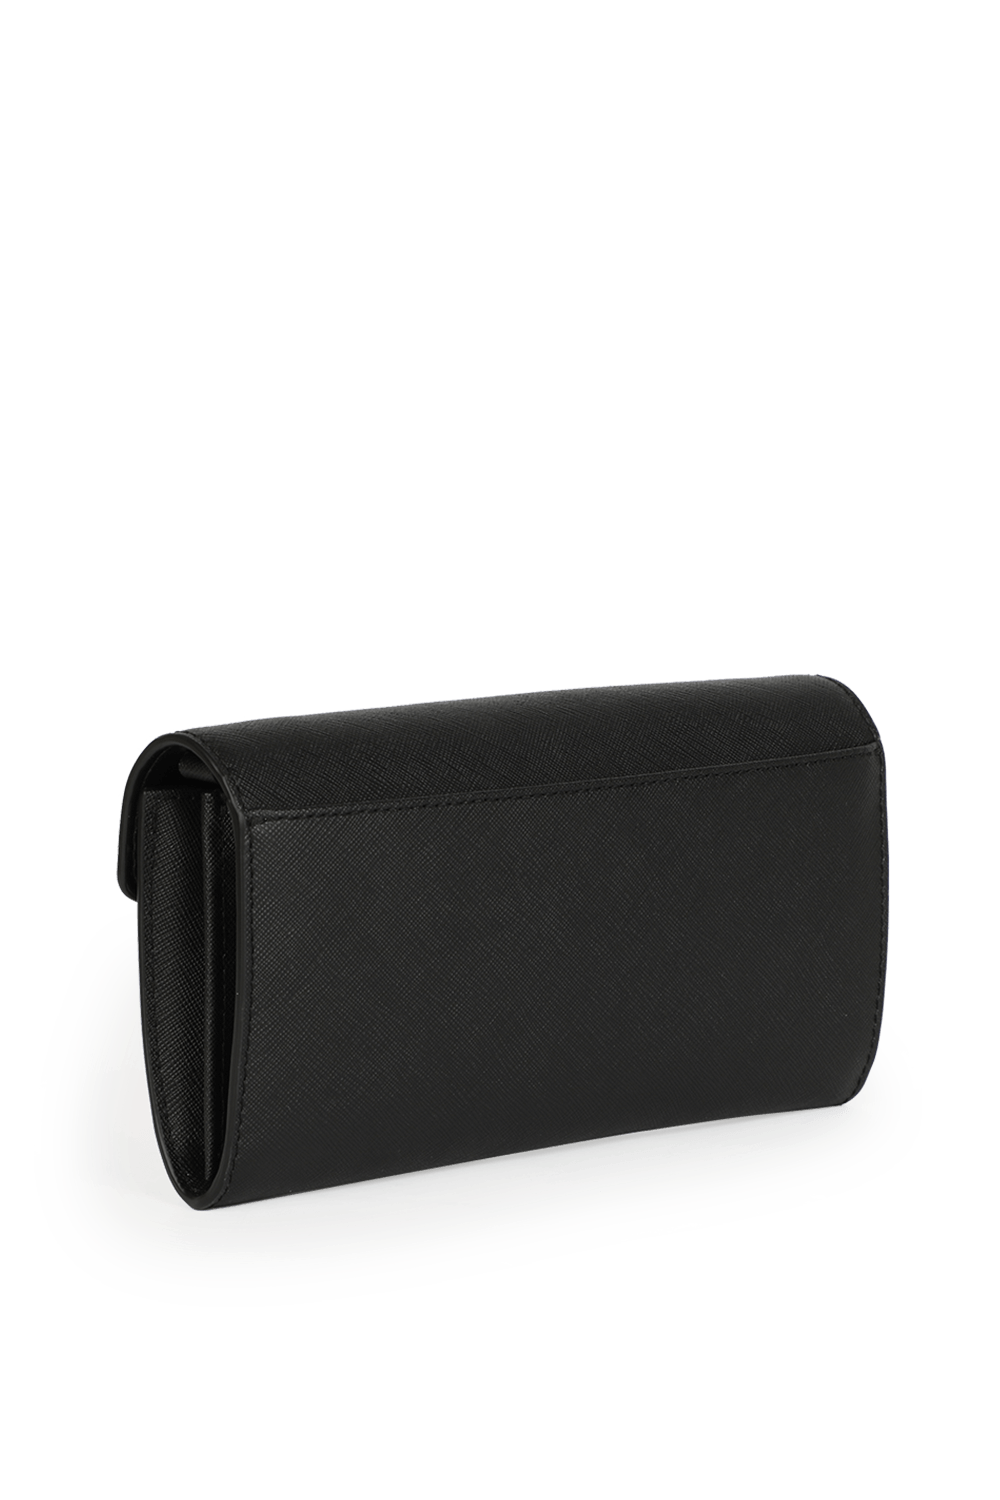 Carmen LG Crossbody Wallet in Black Leather MICHAEL KORS